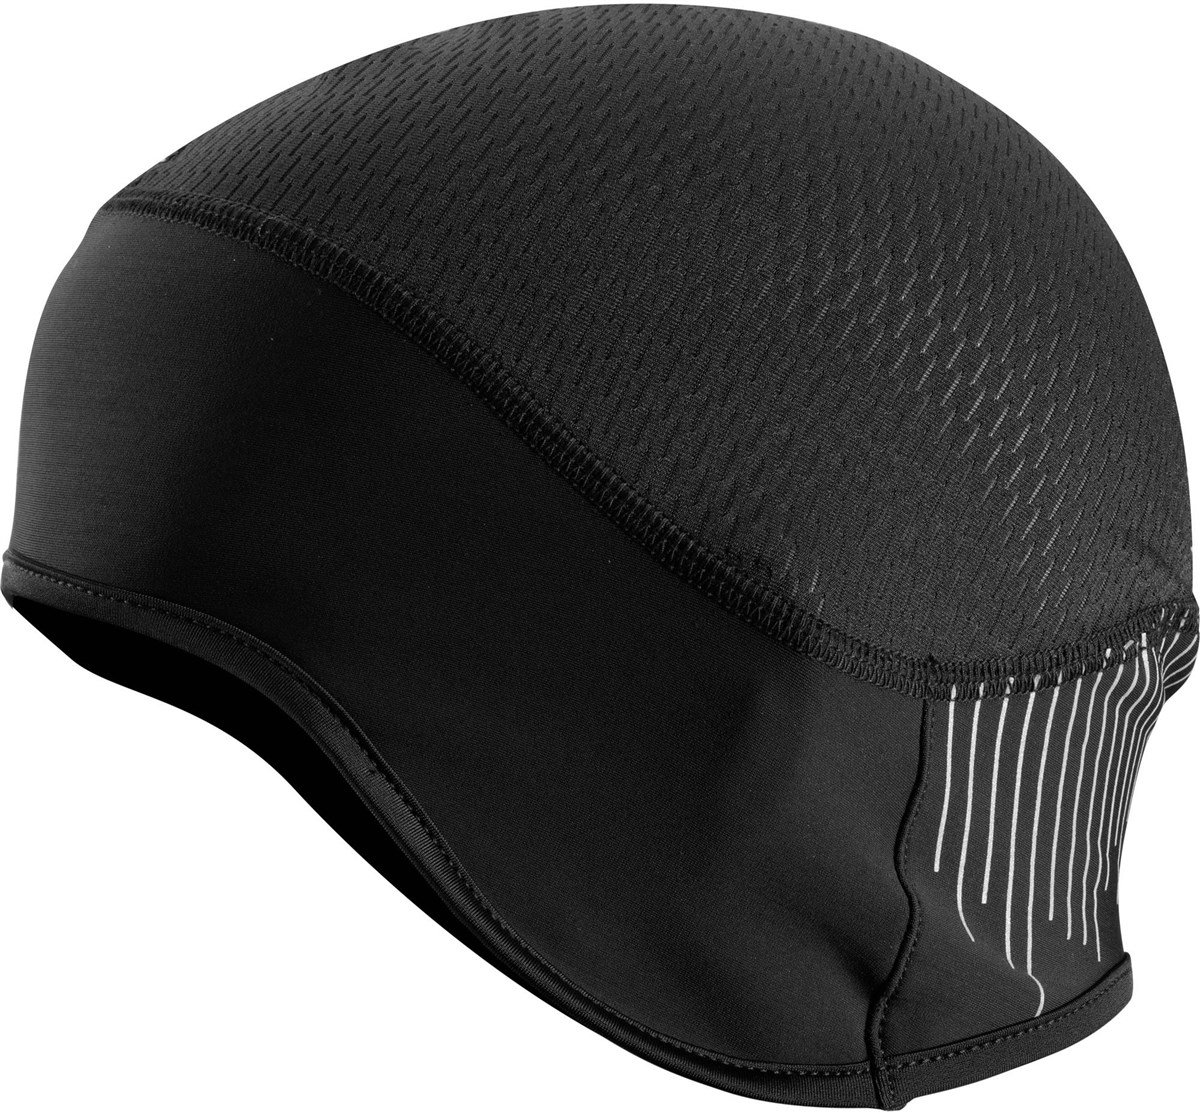 Scott AS 20 Helmet Undercover product image